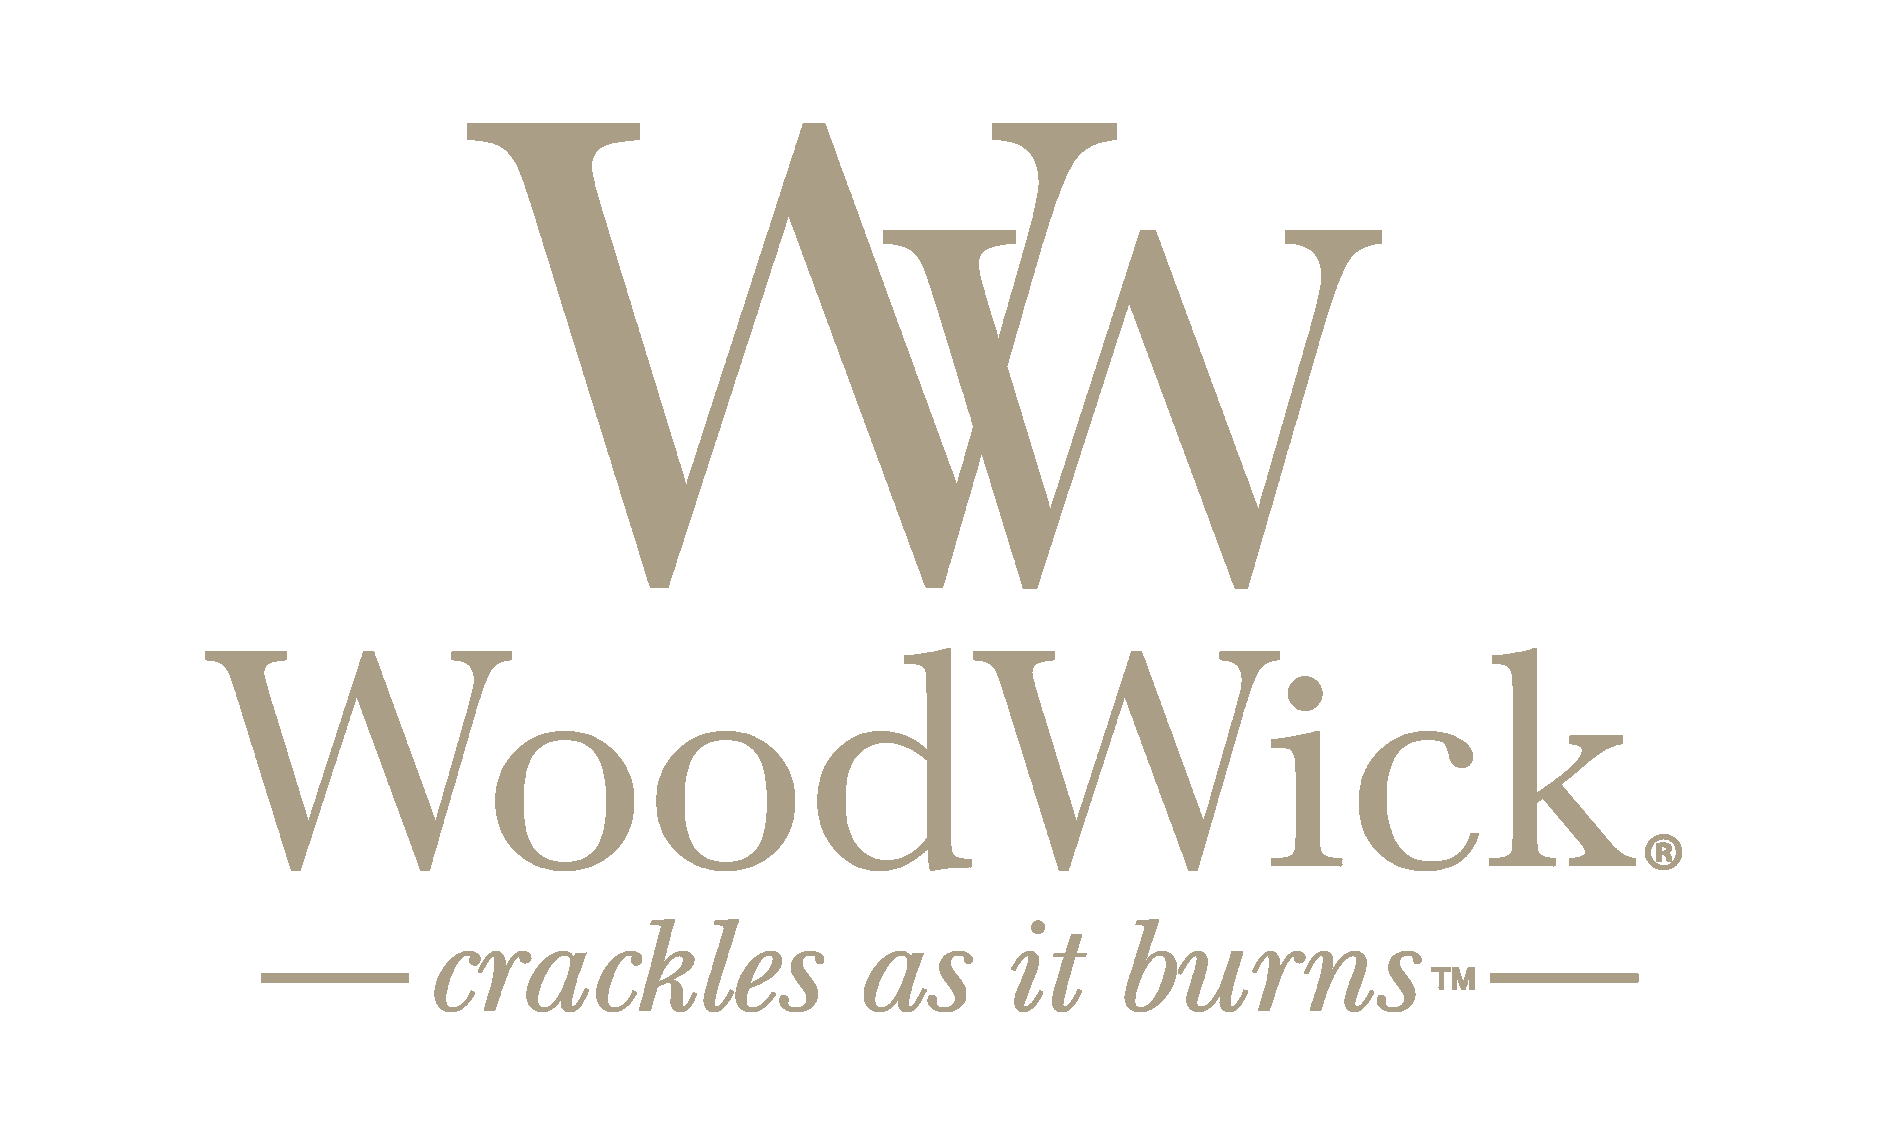 Woodwick logo 3